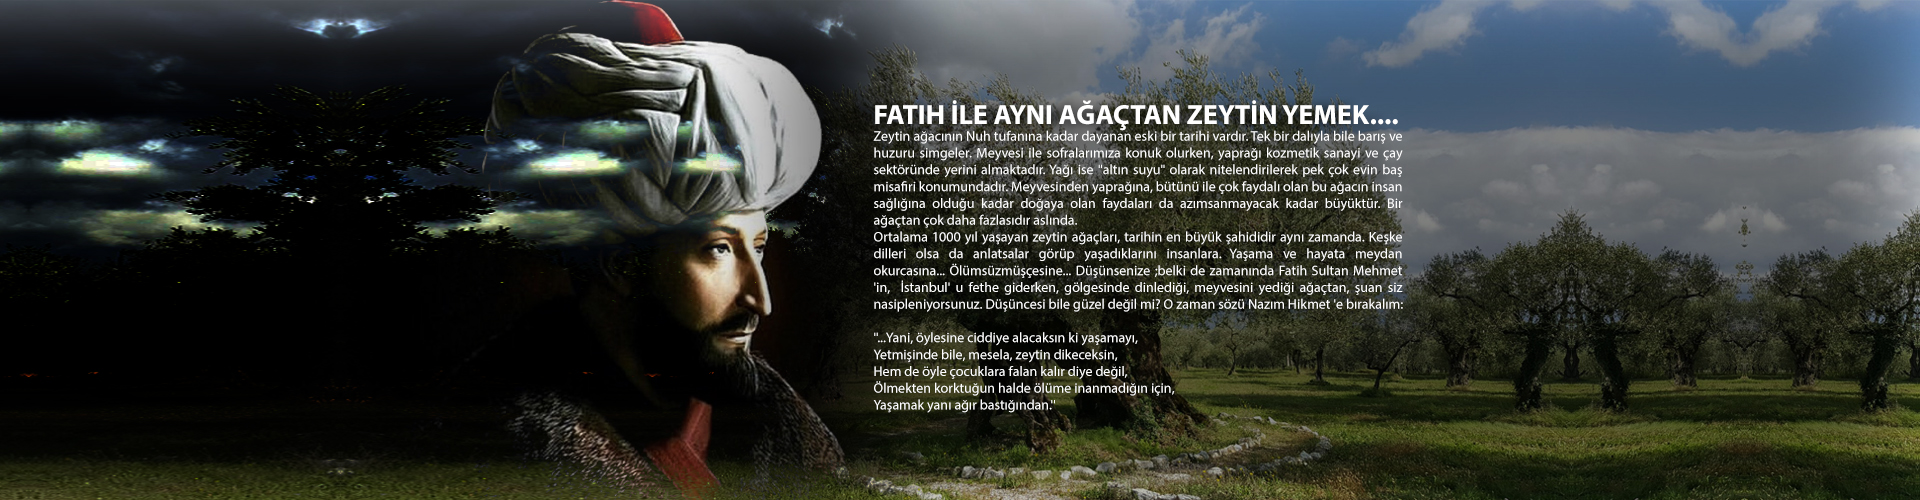 fatih sultan mehmet zeytin hikayesi